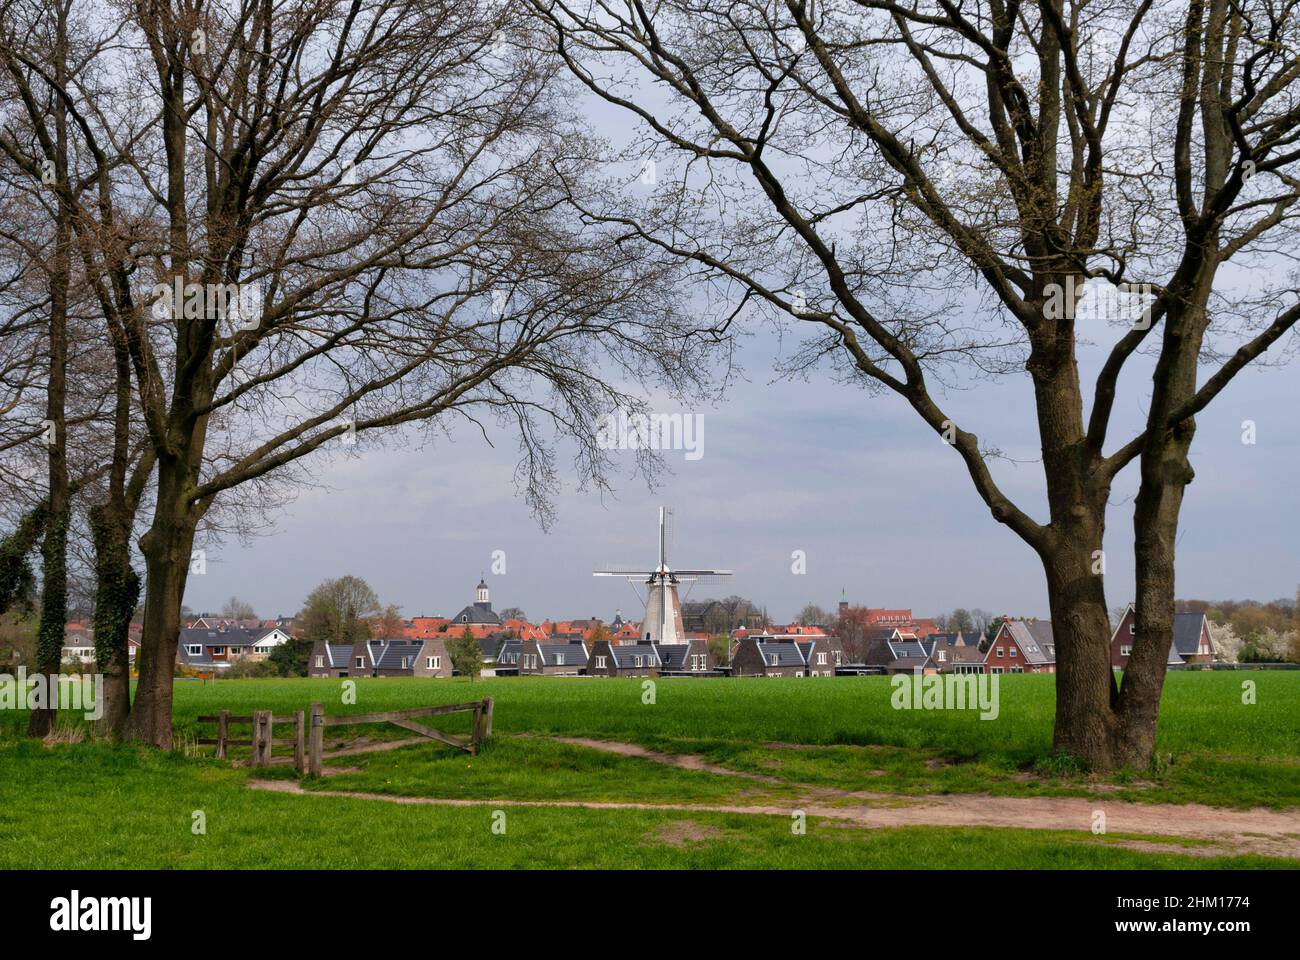 Vista en el molino de viento Molen van Oude Hengel en Ootmarsum Foto de stock